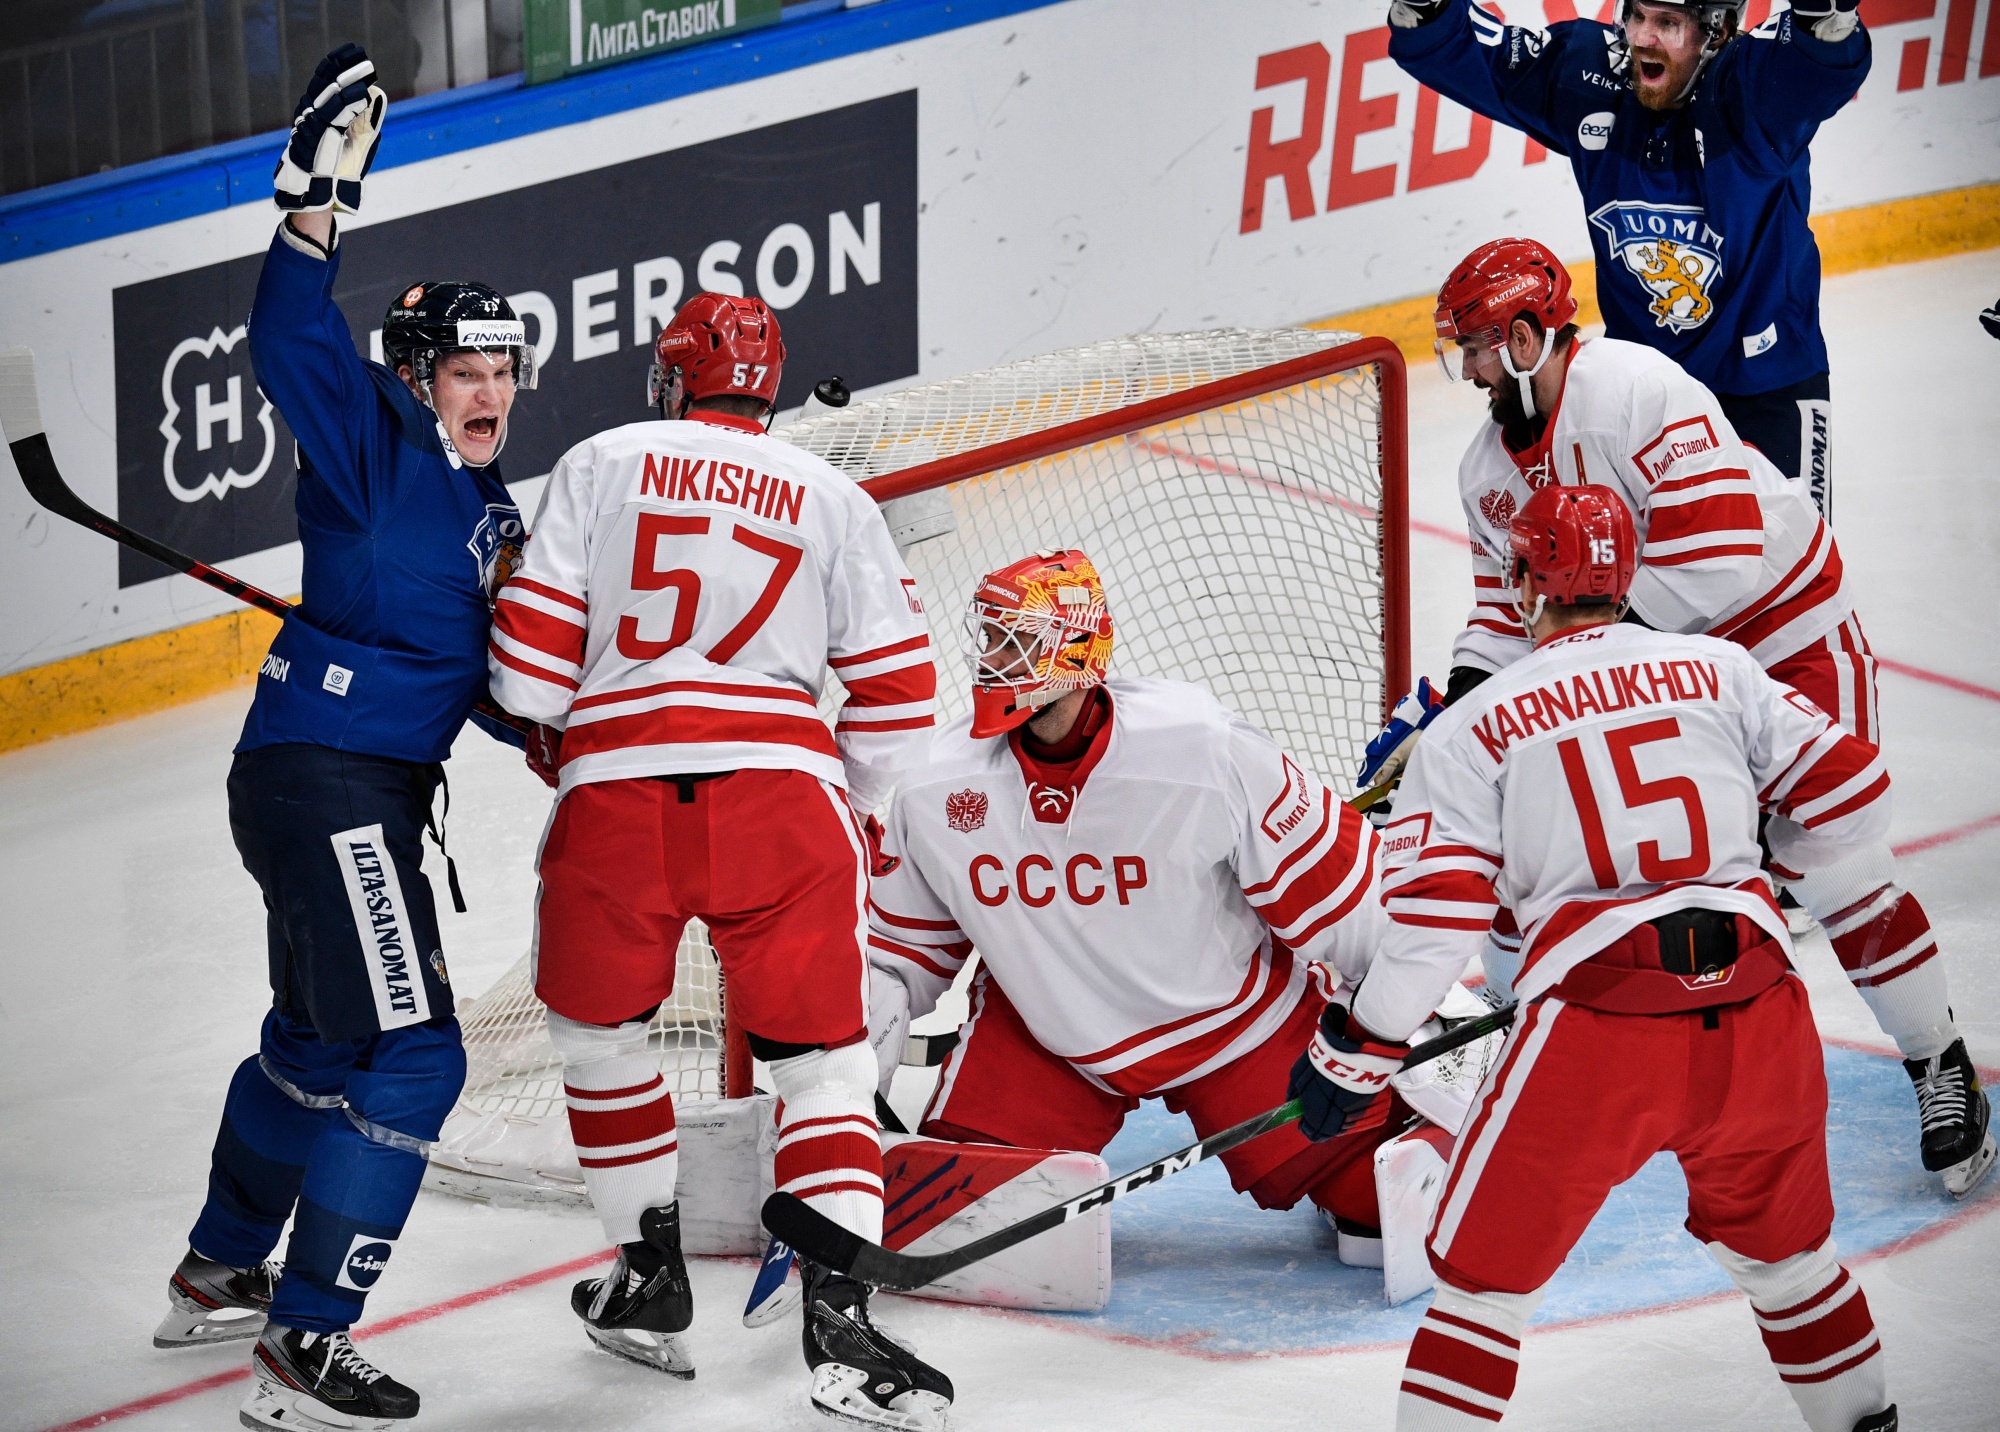 Russian Ice Hockey Team’s USSR Jerseys Raise Eyebrows Bloomberg